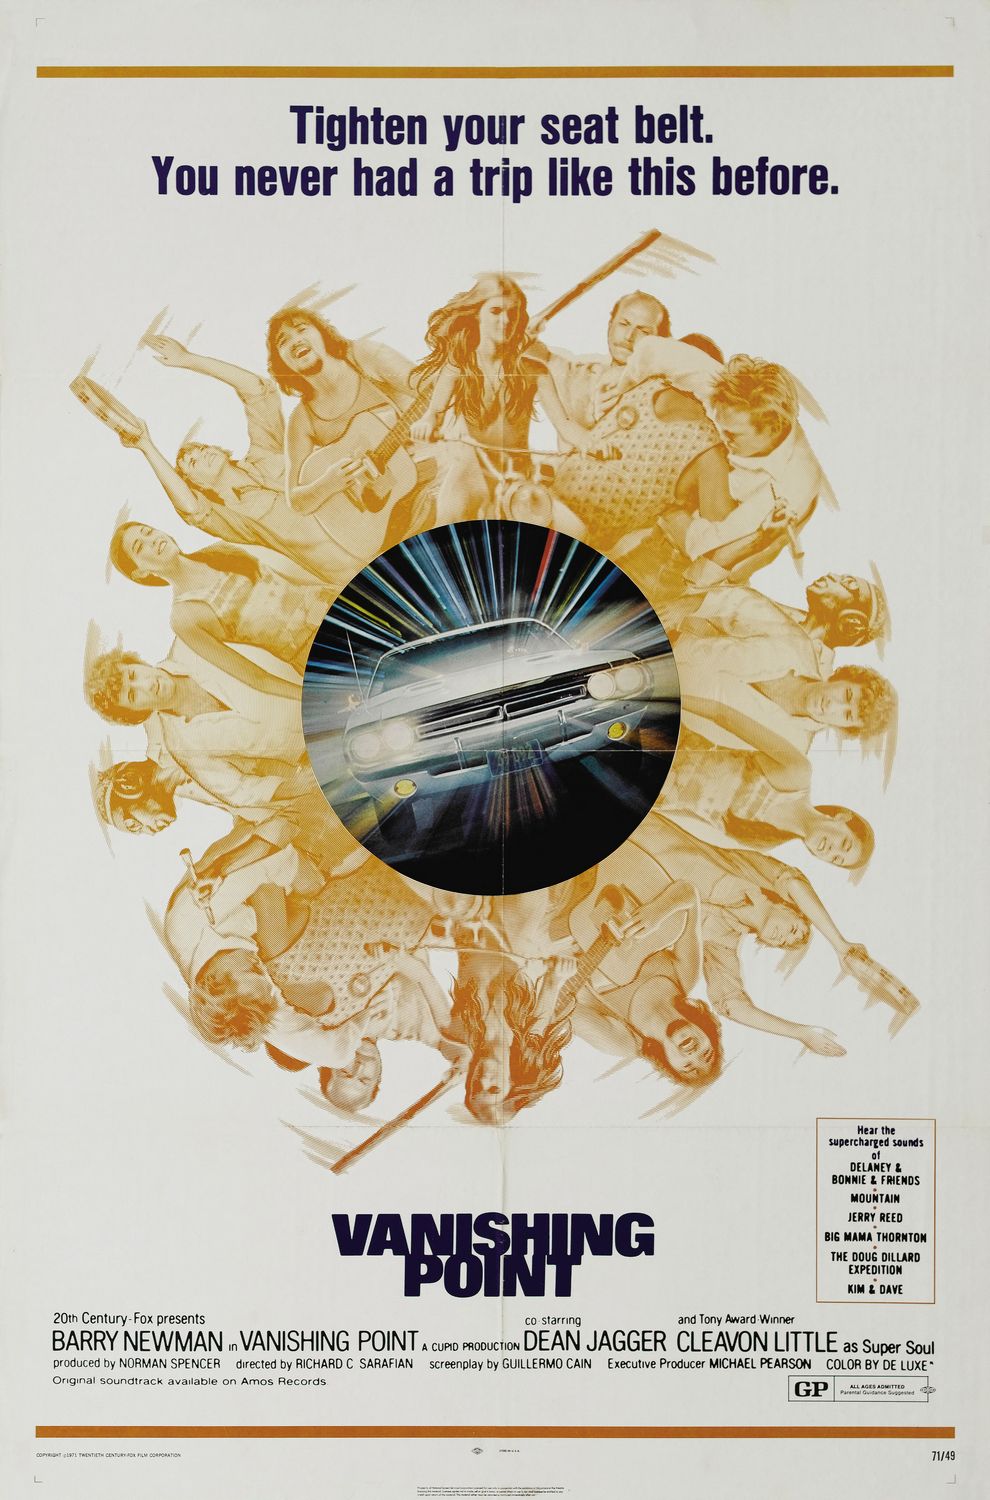 Nonton film Vanishing Point layarkaca21 indoxx1 ganool online streaming terbaru